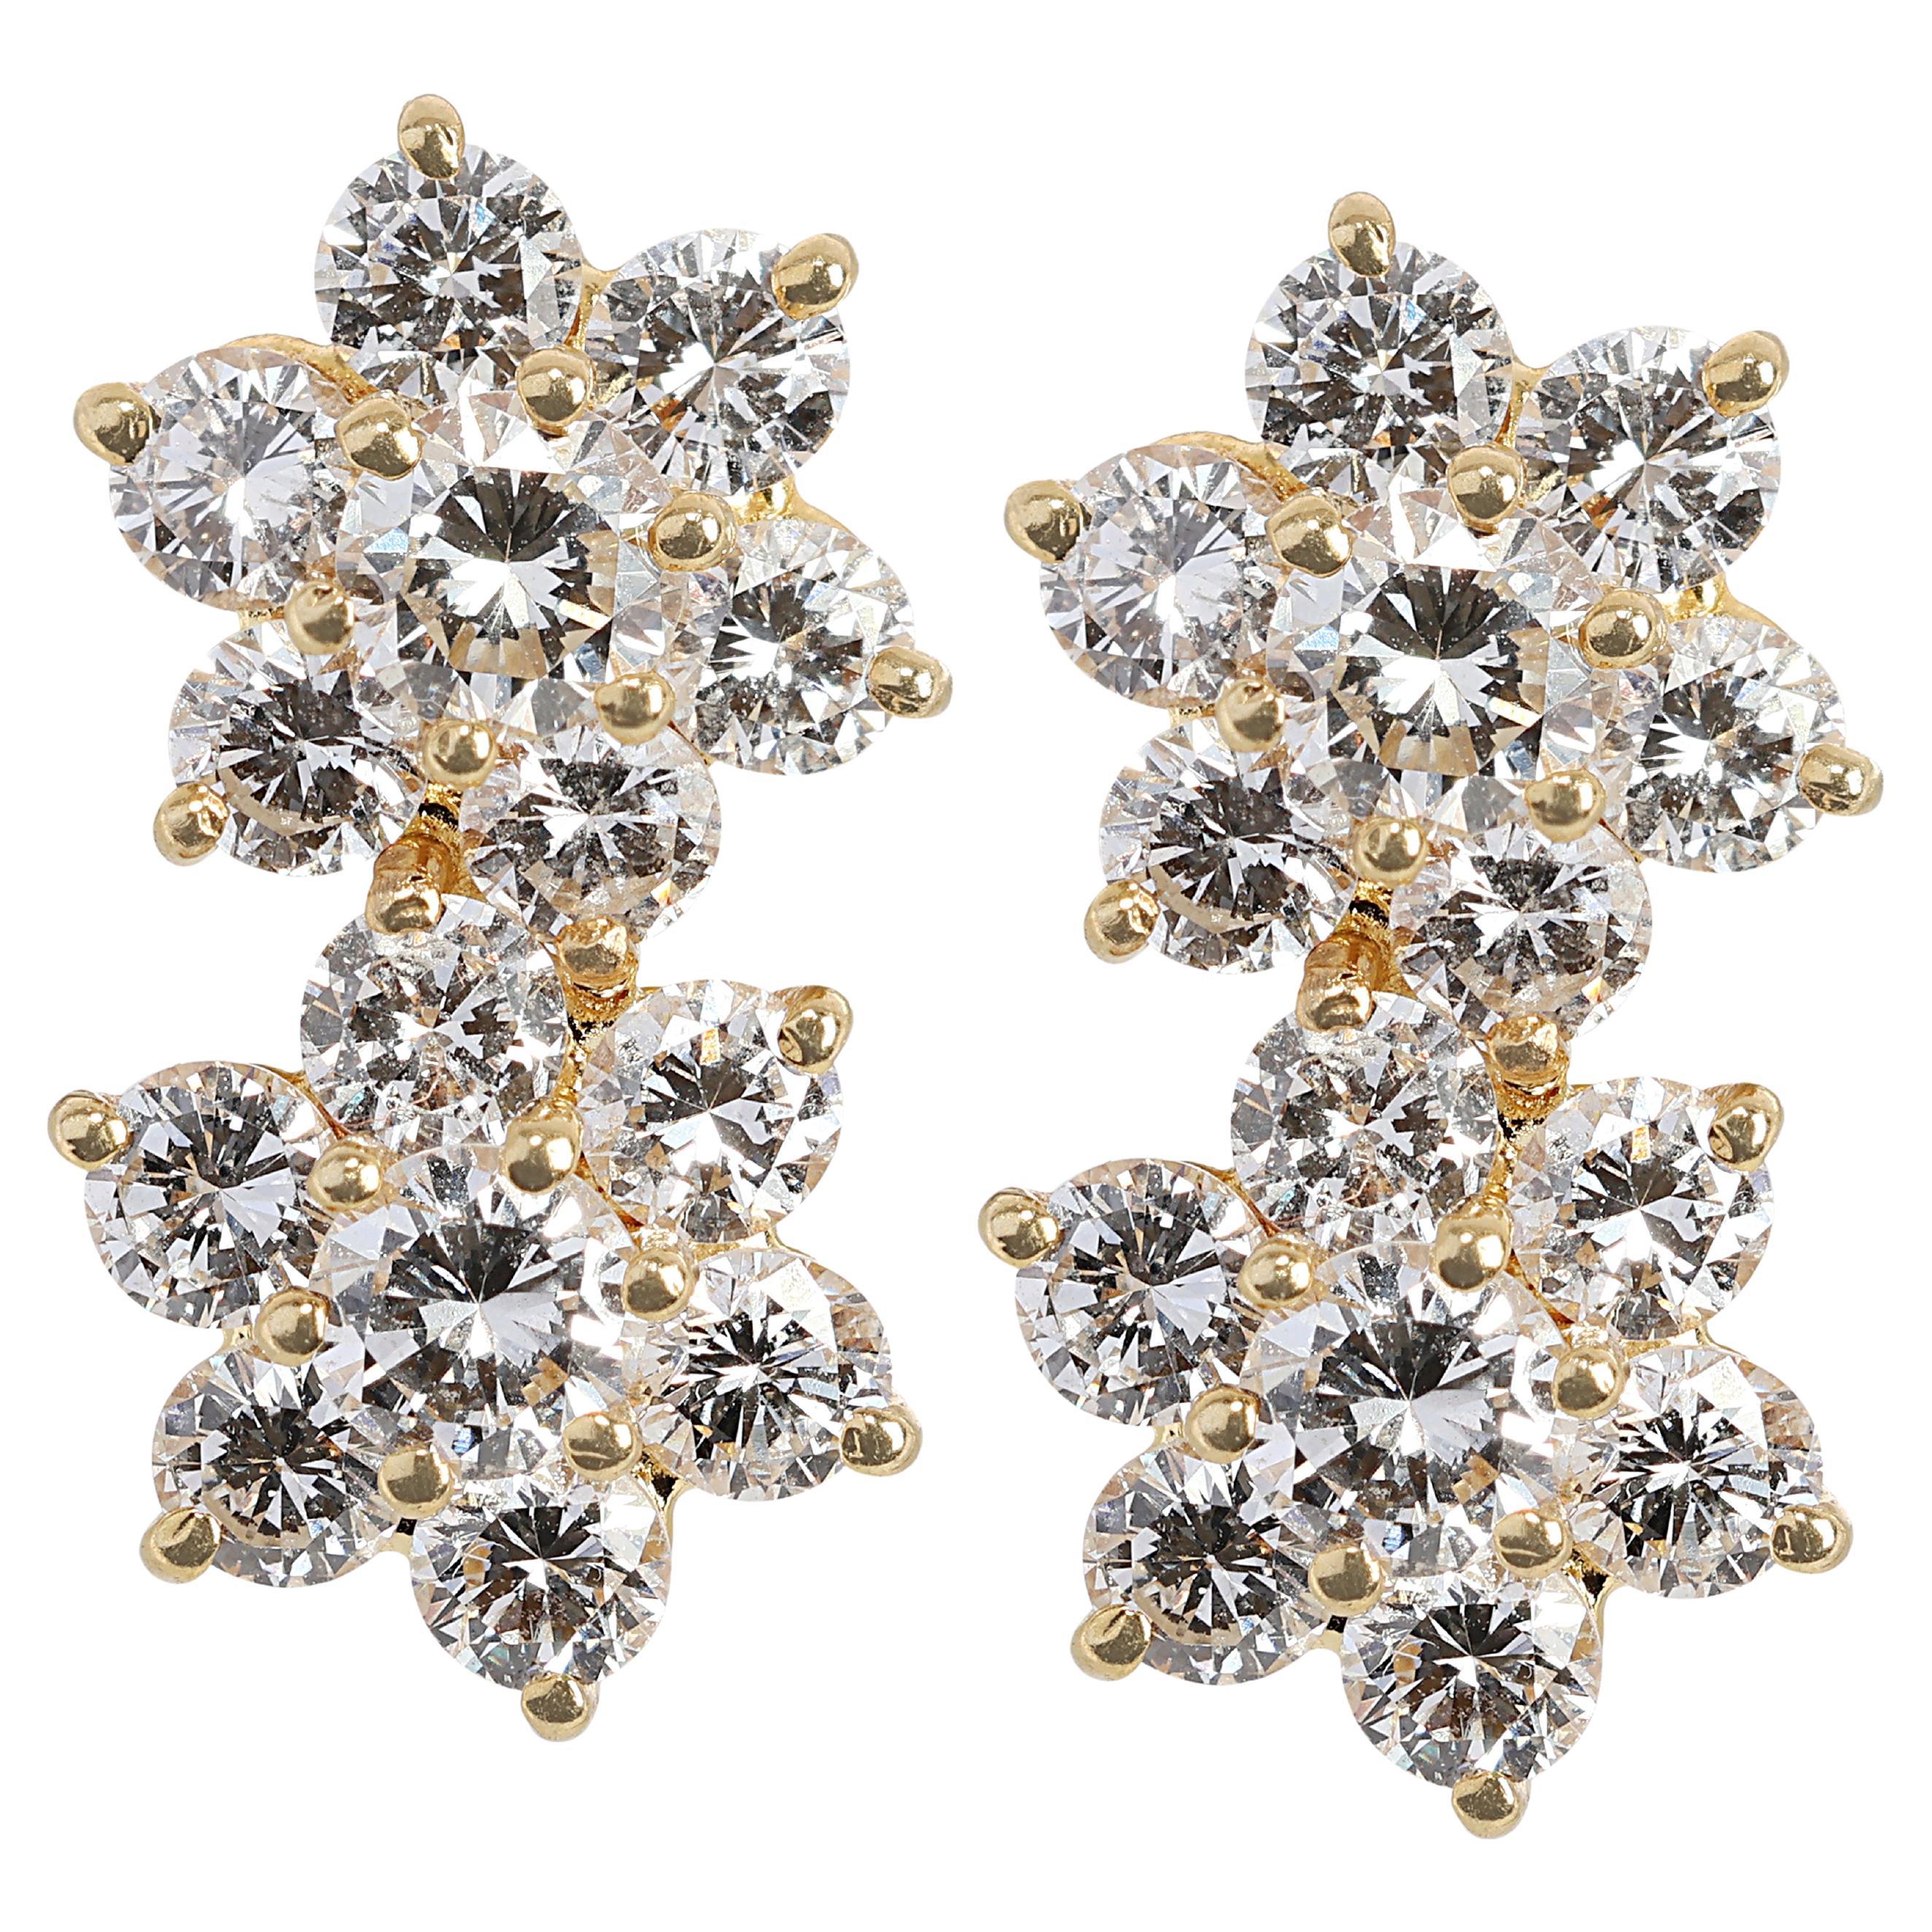 Stunning 1.52ct Diamonds Stud Earrings in 18K Yellow Gold